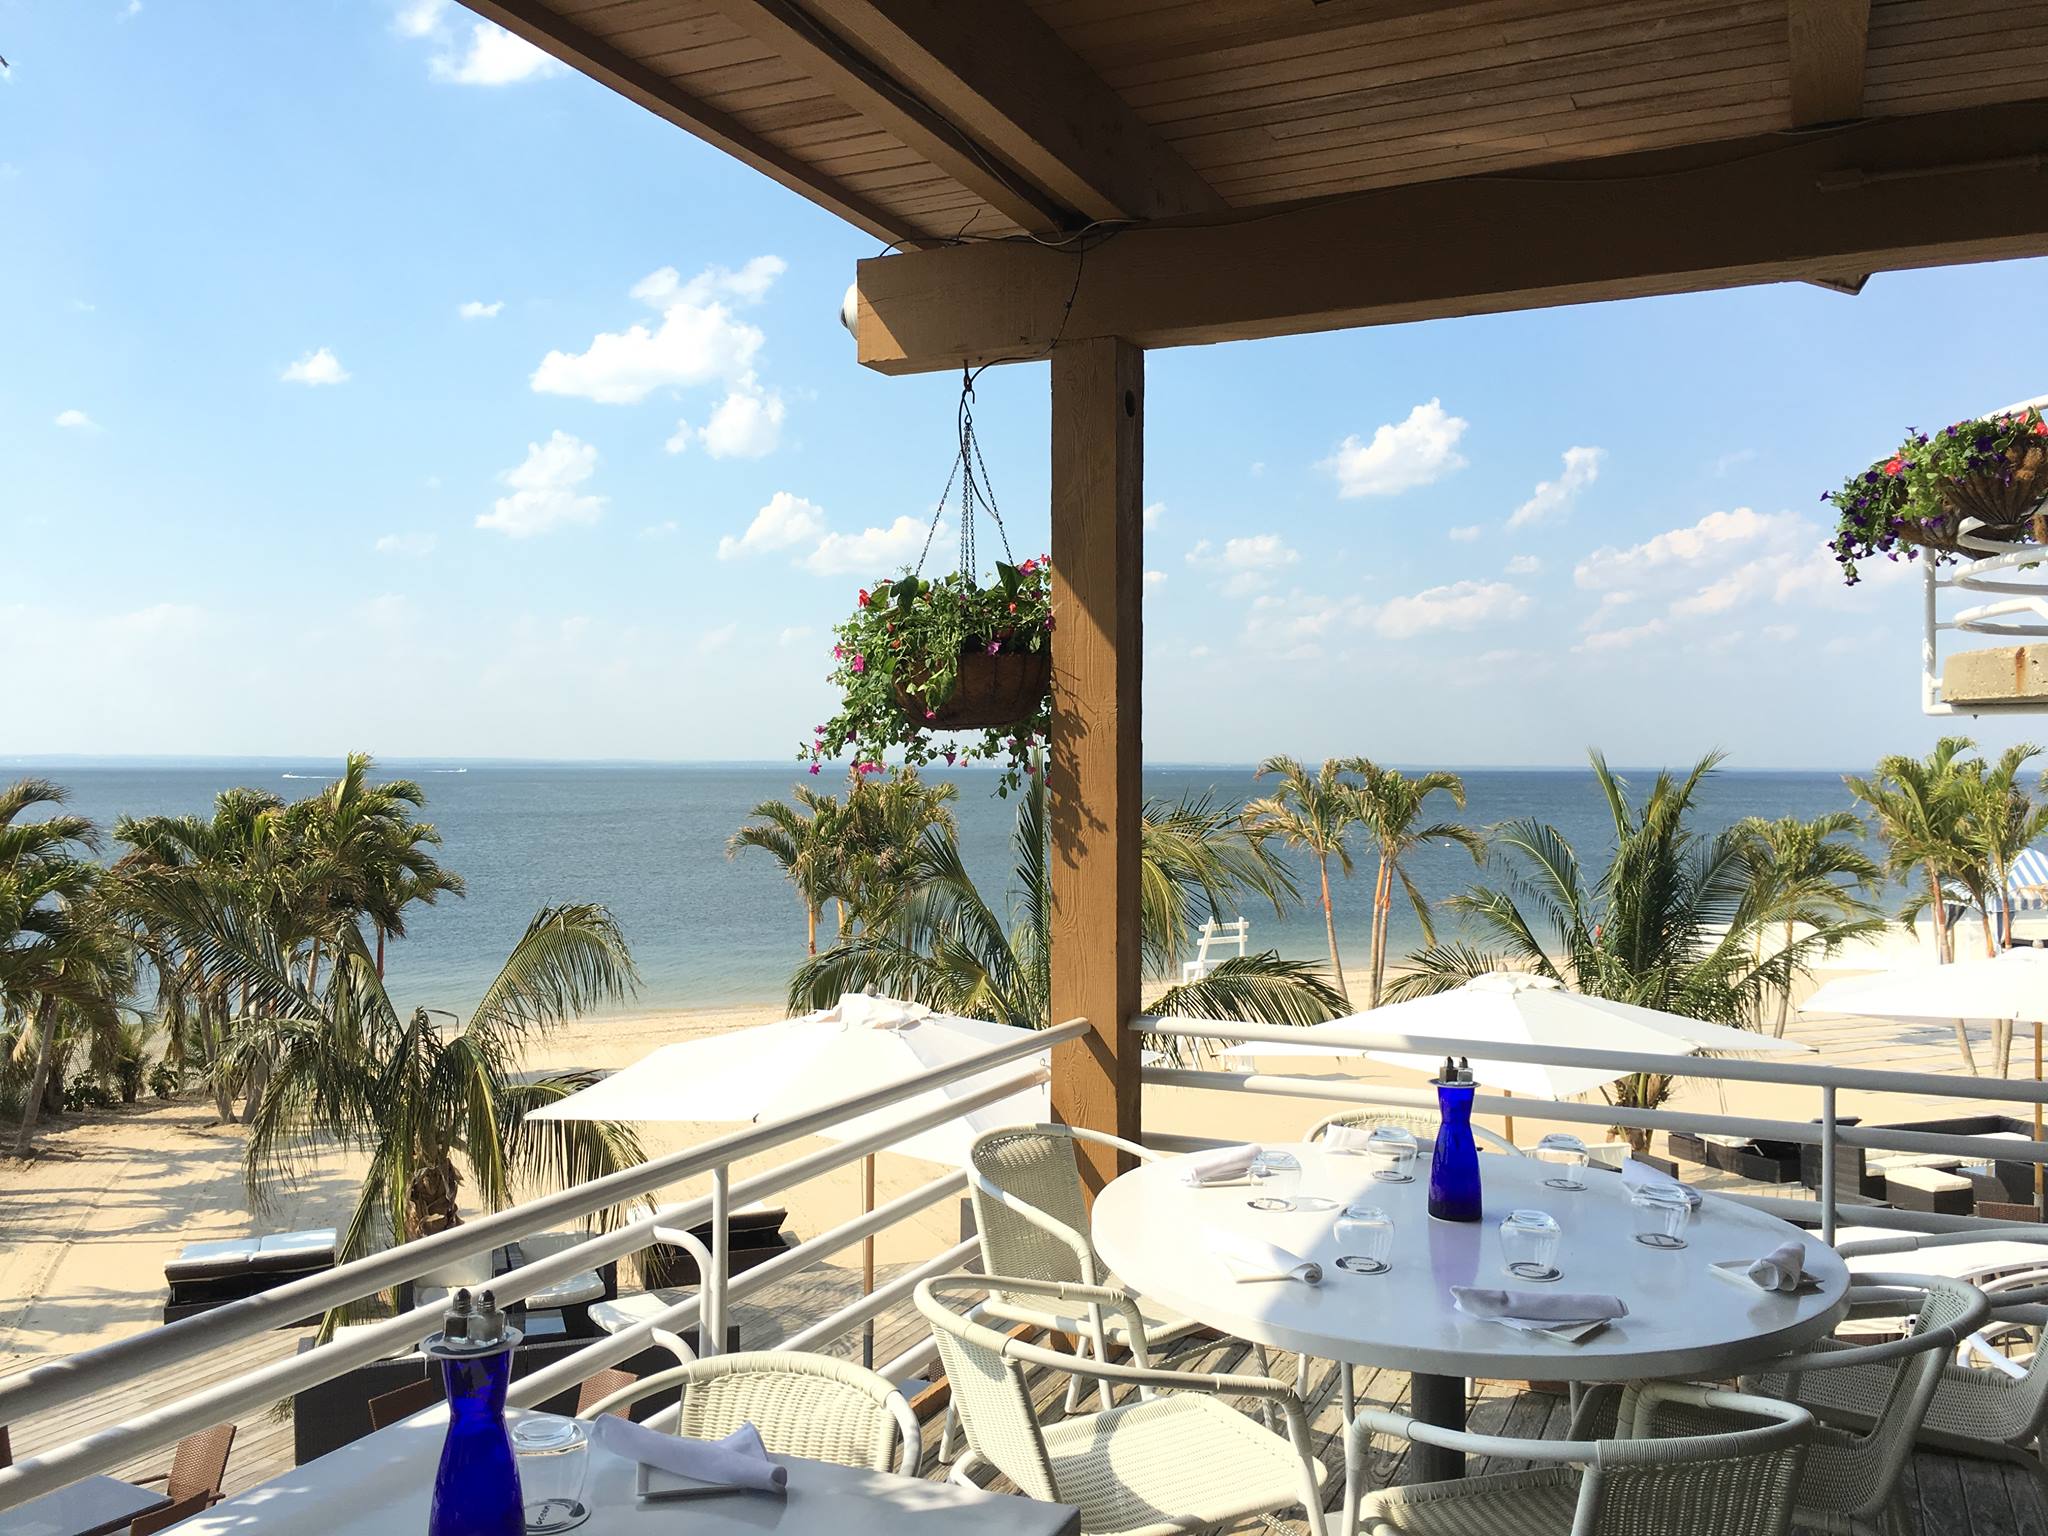 Best Waterfront Restaurants on Long Island - The Thunderbird